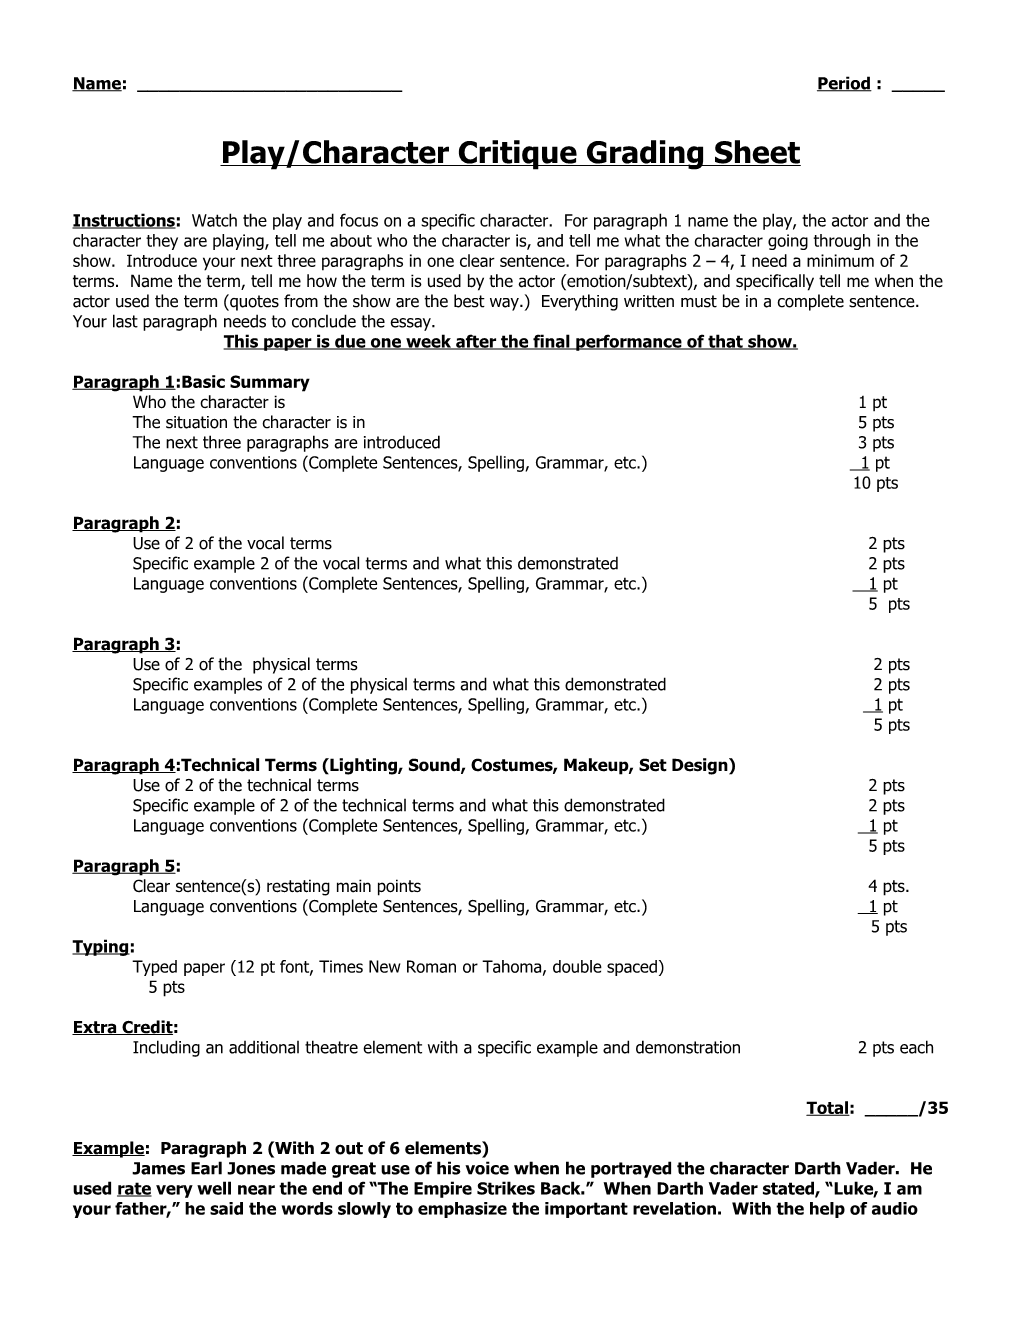 Play/Character Critique Grading Sheet